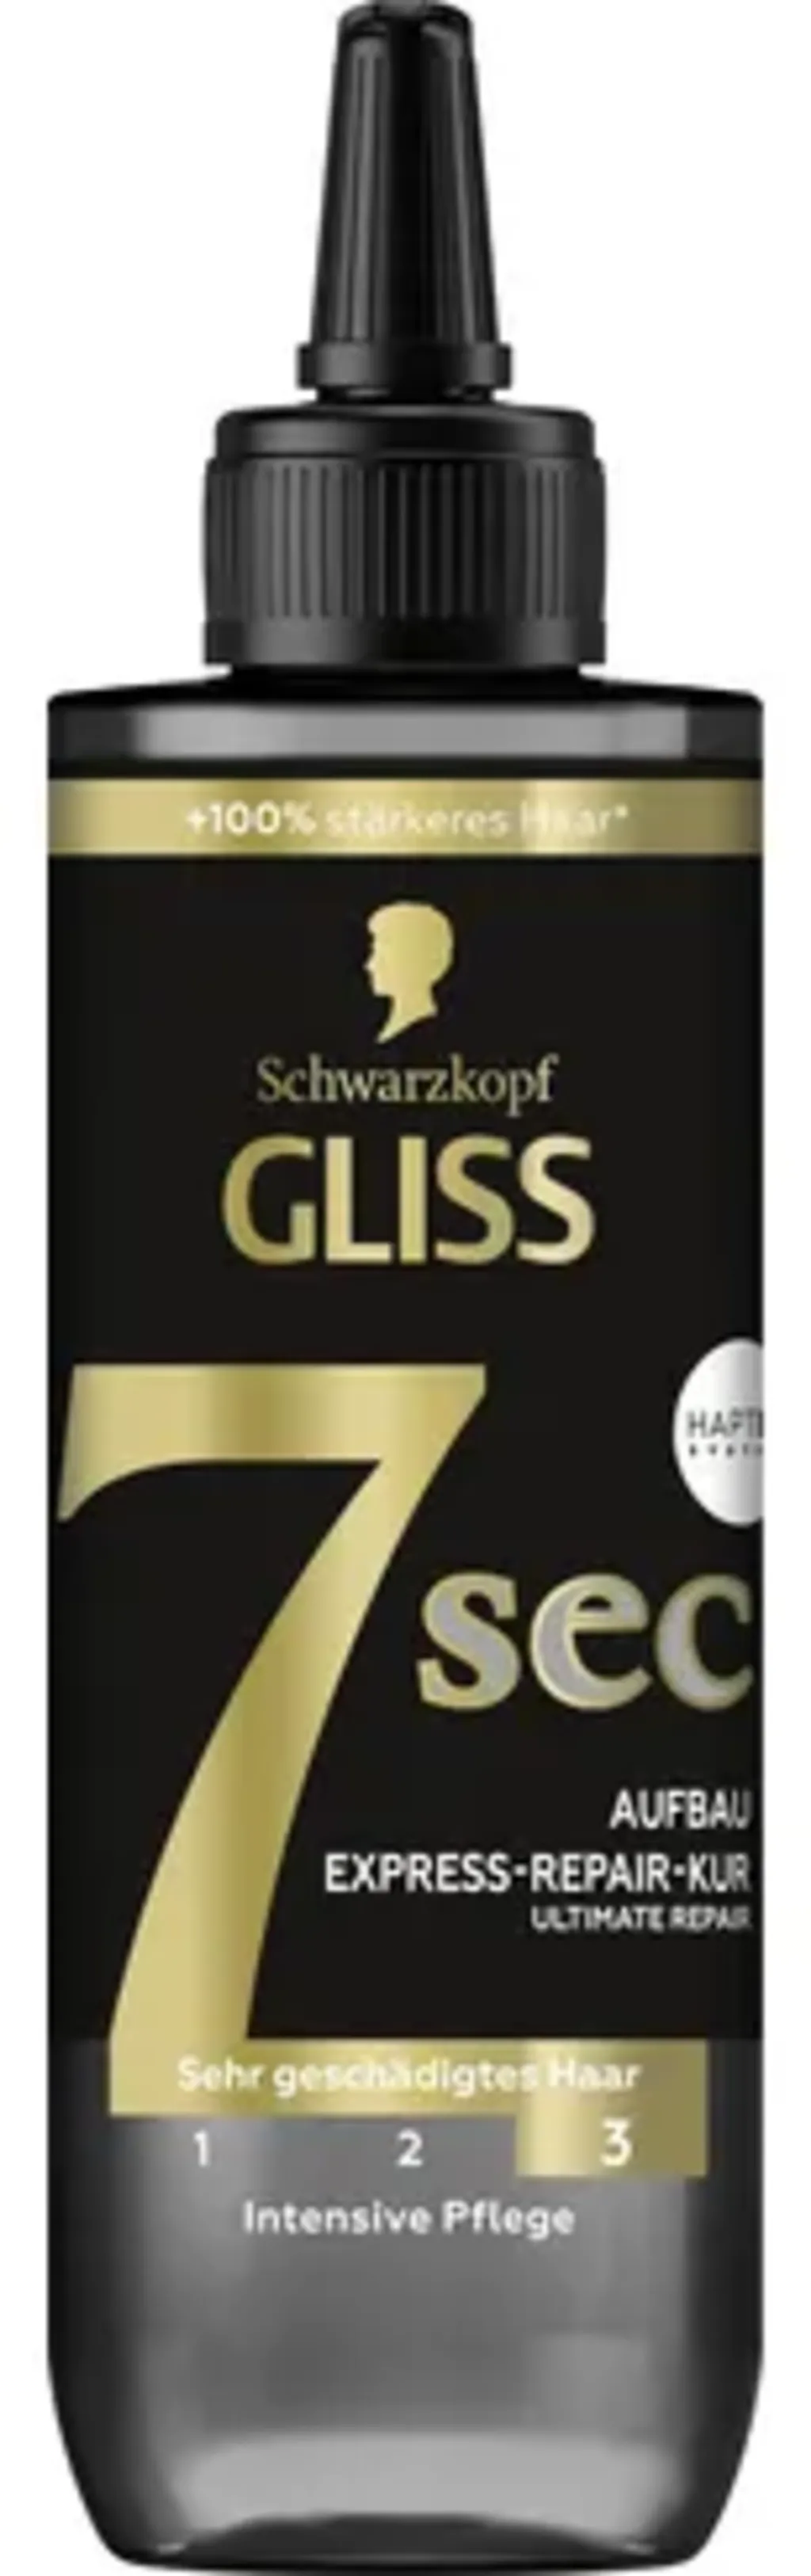 Schwarzkopf GLISS KUR 7 Seconds Express Ultimate Repair, 200 ml - oh feliz